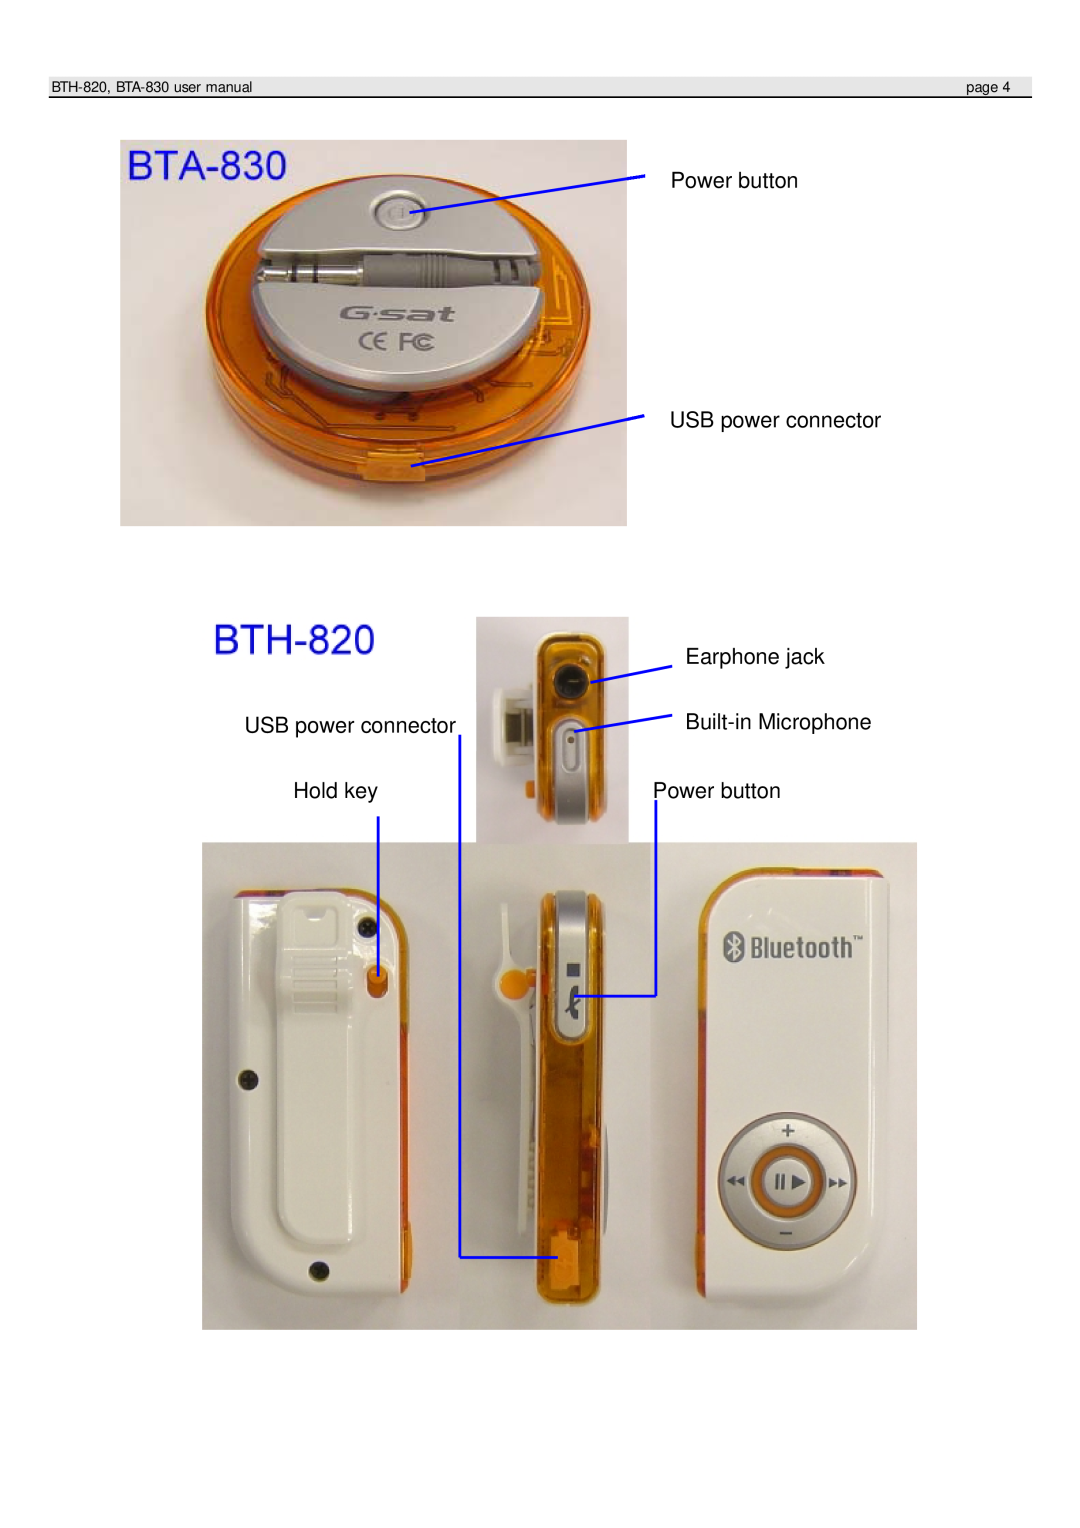 Globalsat Technology BTH-820, BTA-830 USB power connector Hold key, Power button USB power connector Earphone jack, page 